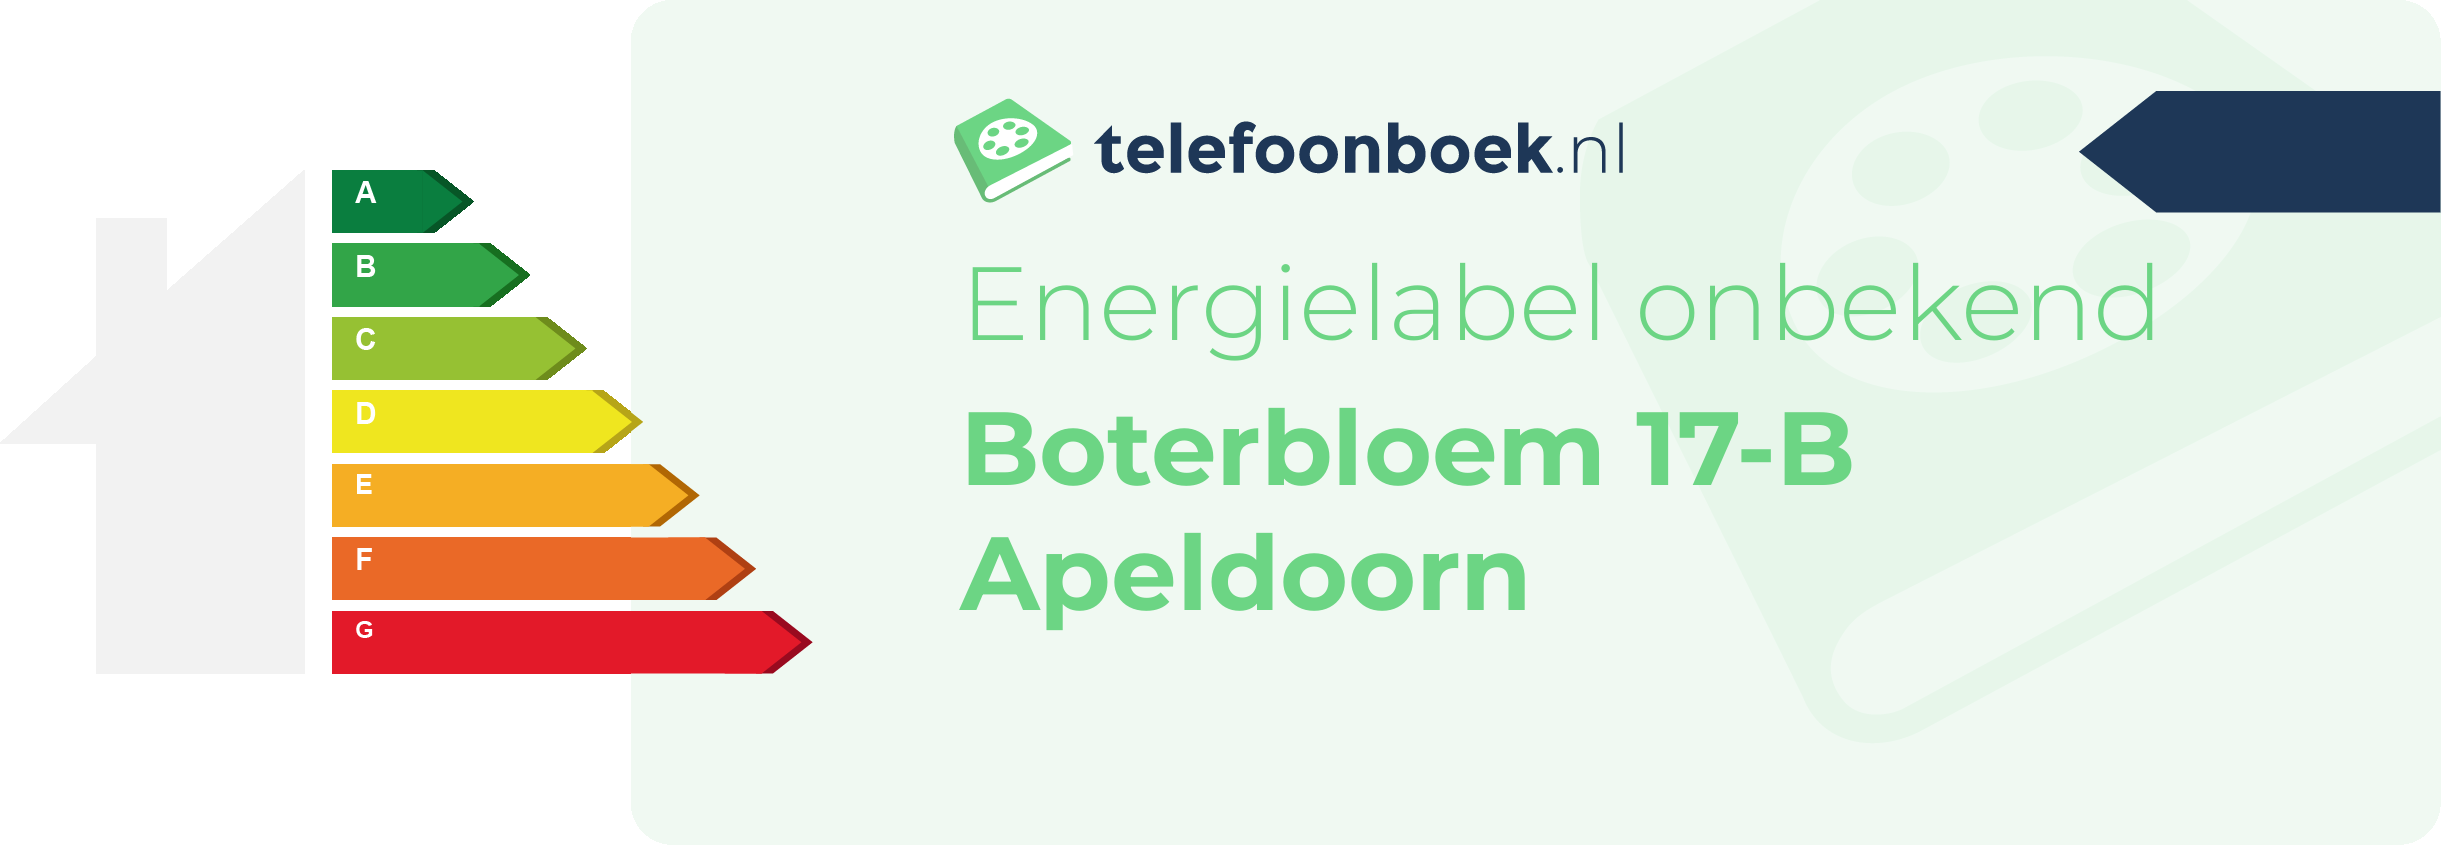 Energielabel Boterbloem 17-B Apeldoorn